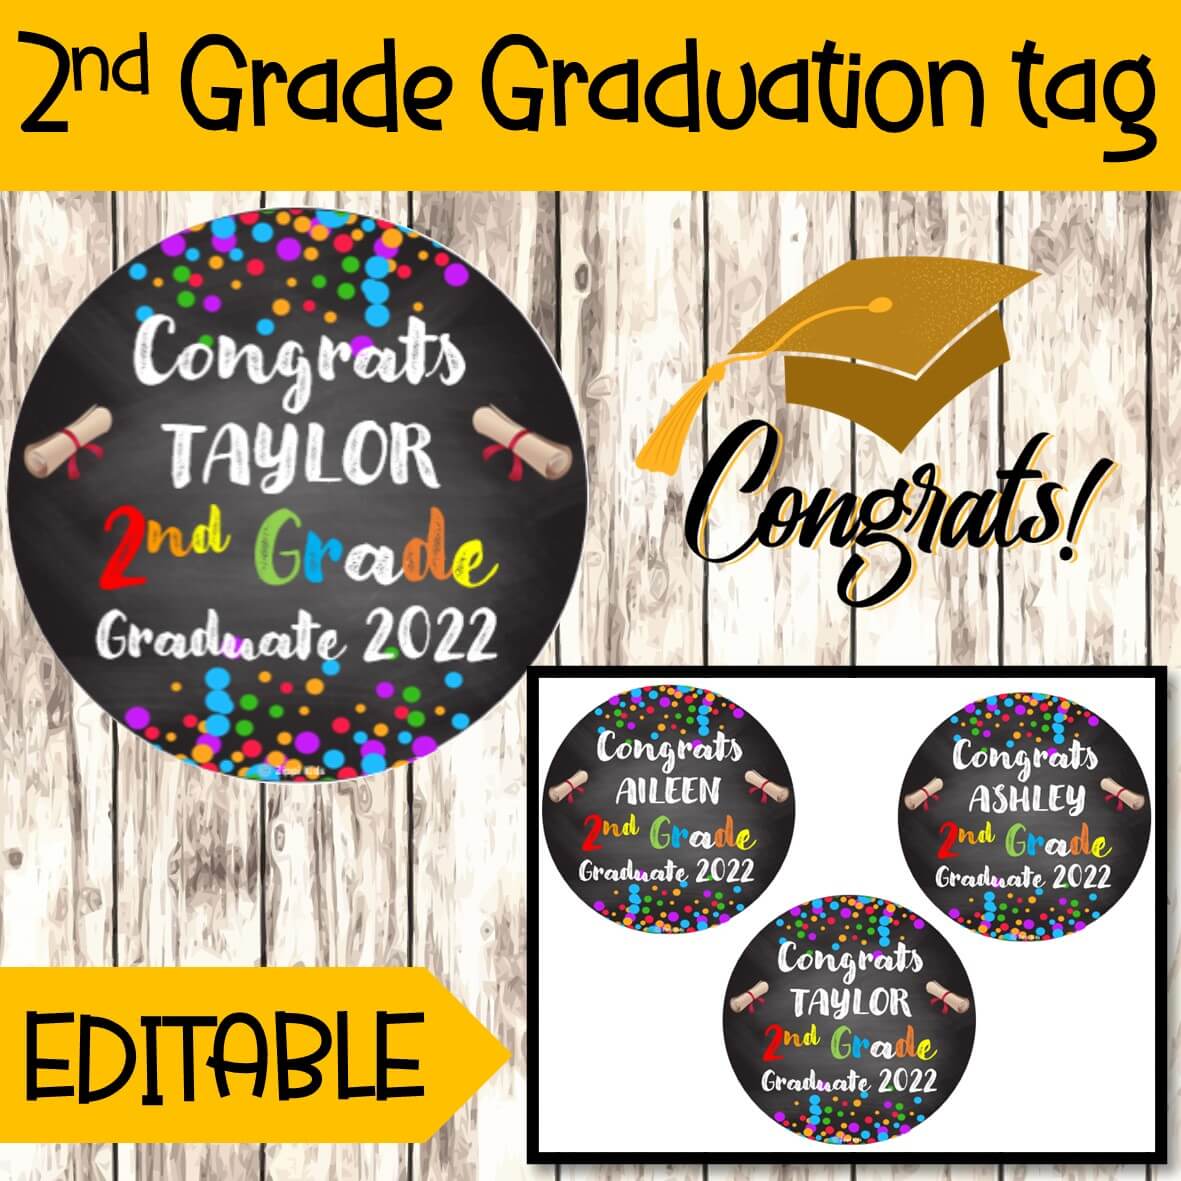 EDITABLE 2nd Grade Graduation Gift Tags, Congrats 2nd Grade Graduate tags